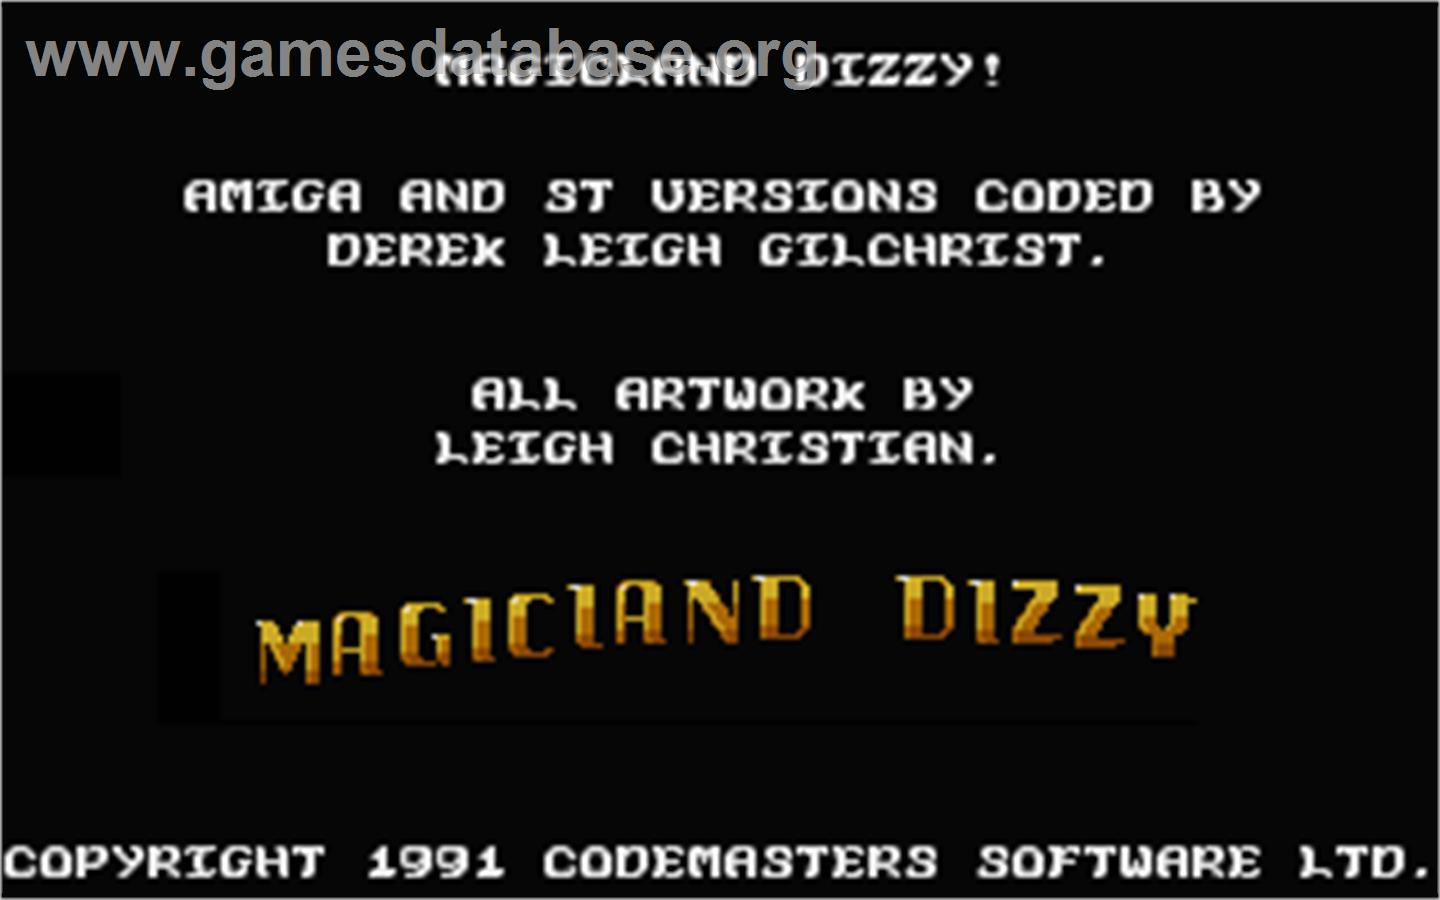 Treasure Island Dizzy - Atari ST - Artwork - Title Screen